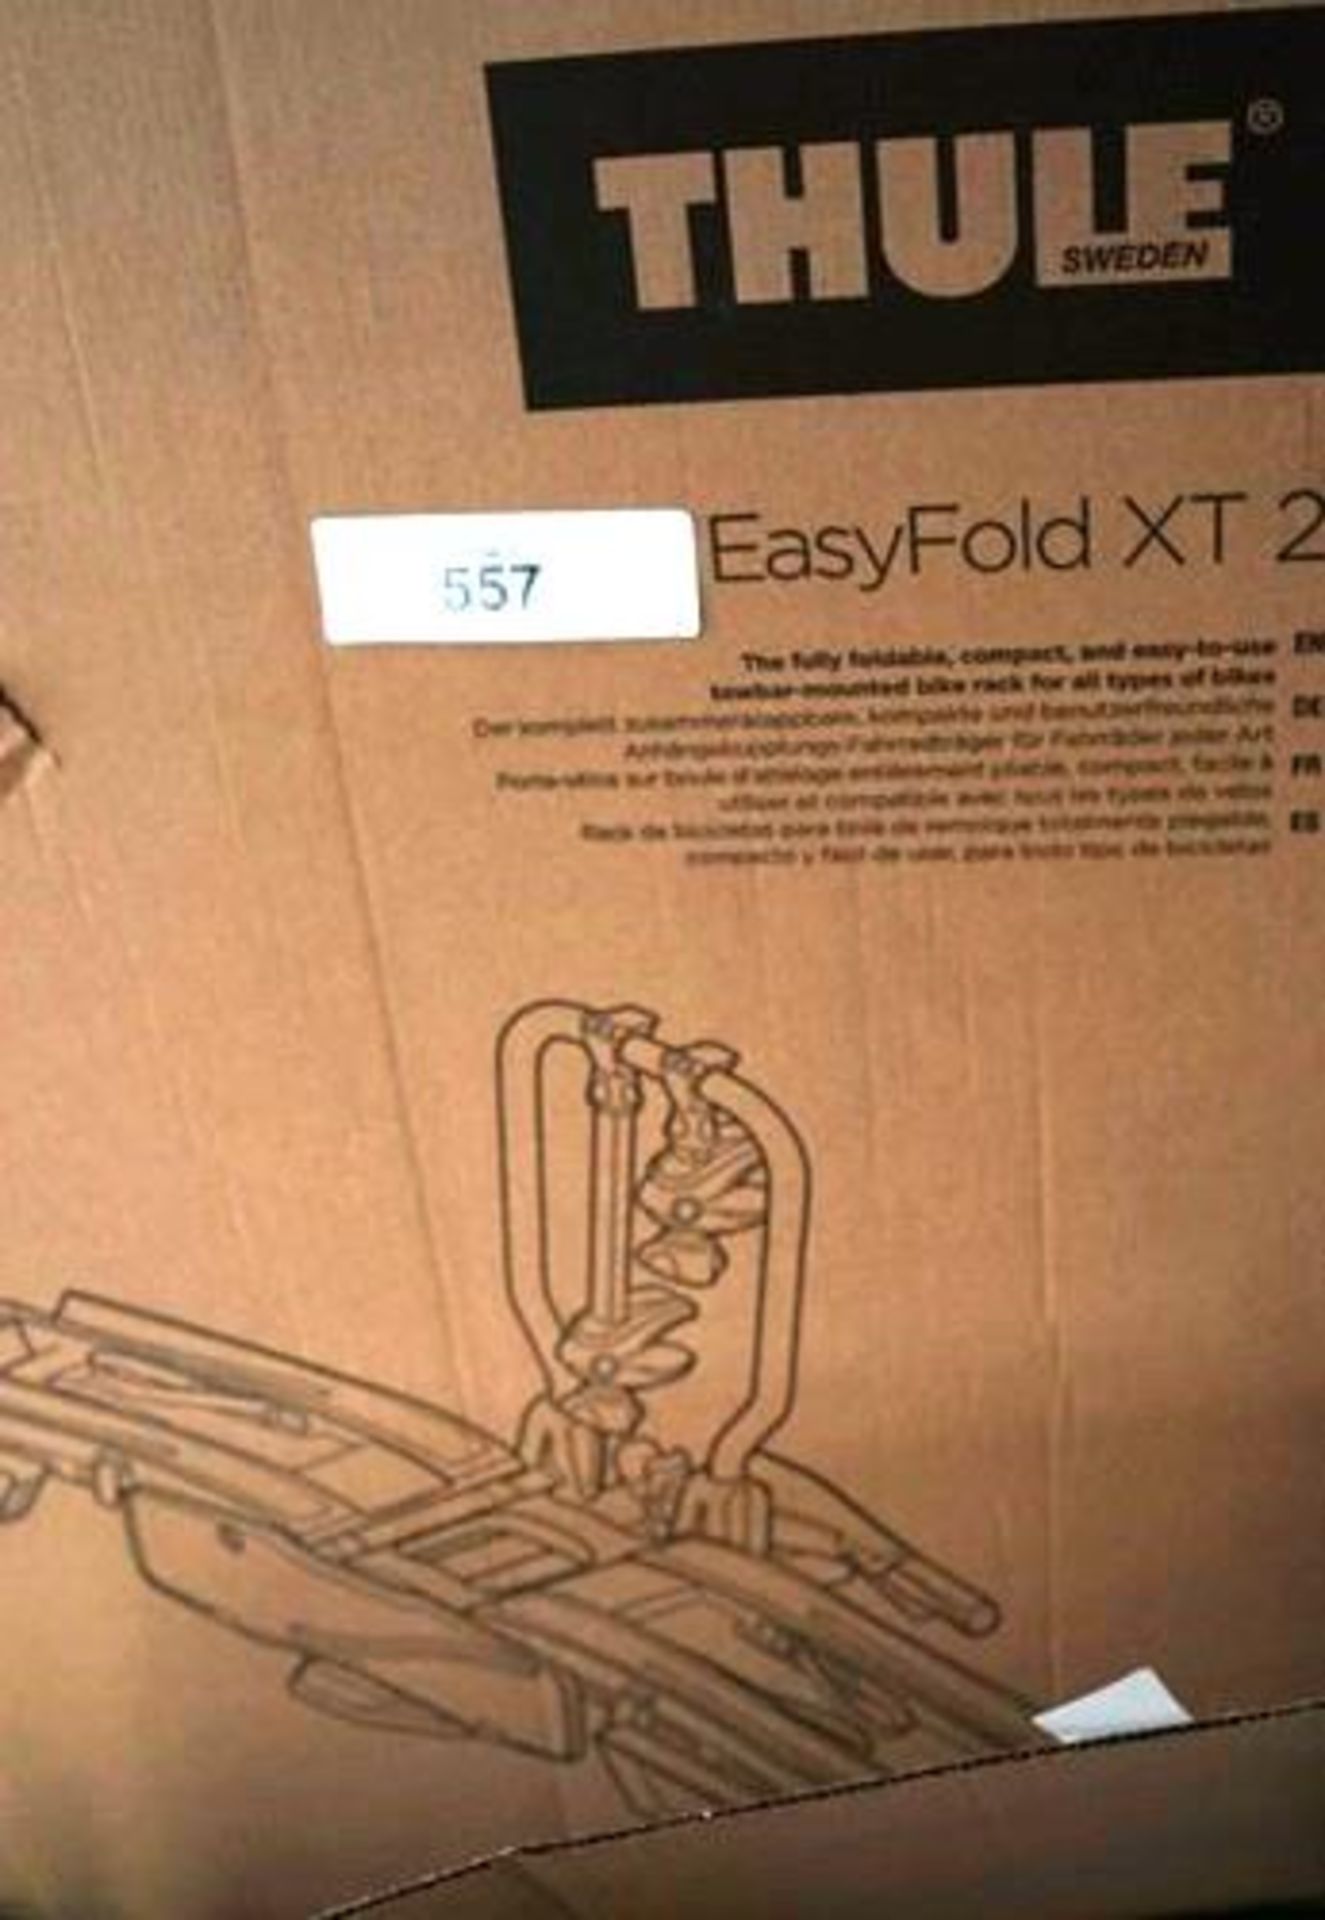 1 x Thule Easyfold XT2 bike carrier, model 933 - New (ES16) - Image 2 of 2